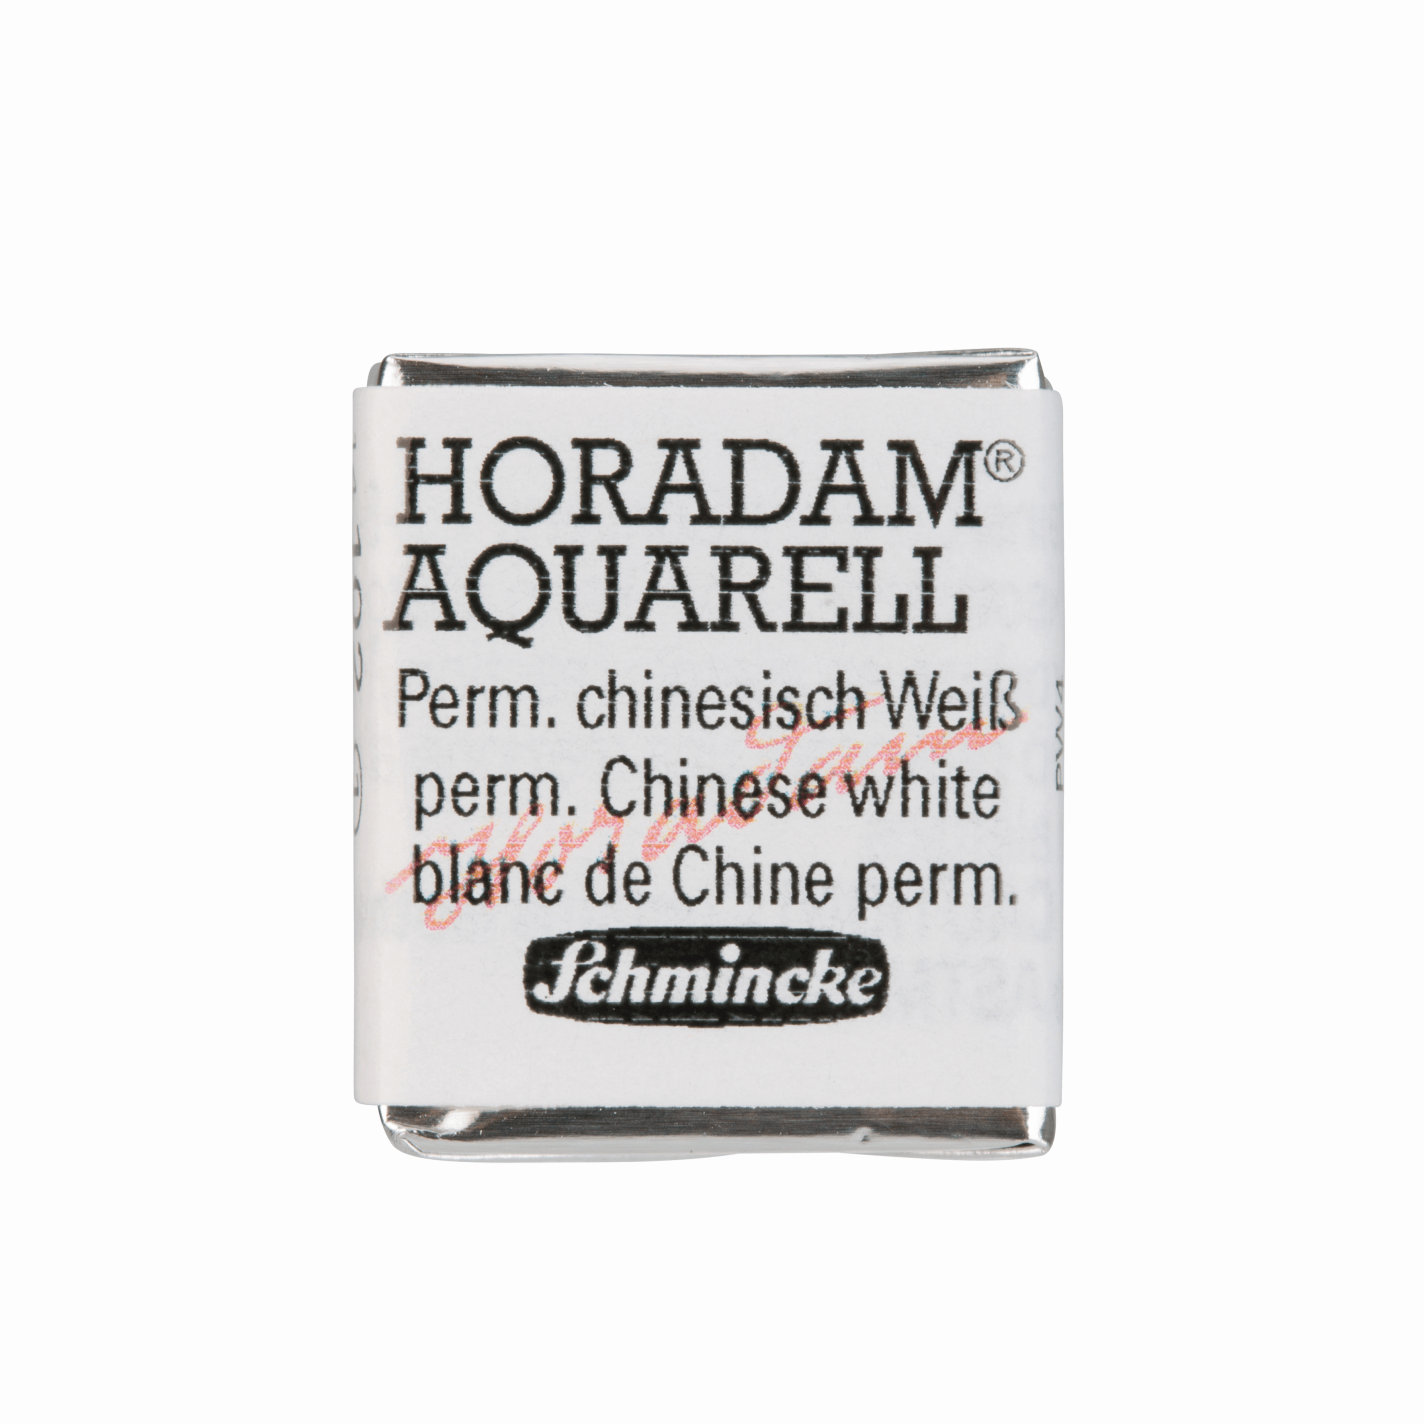 Schmincke Horadam Aquarell pans 1/2 pan permanent Chinese white